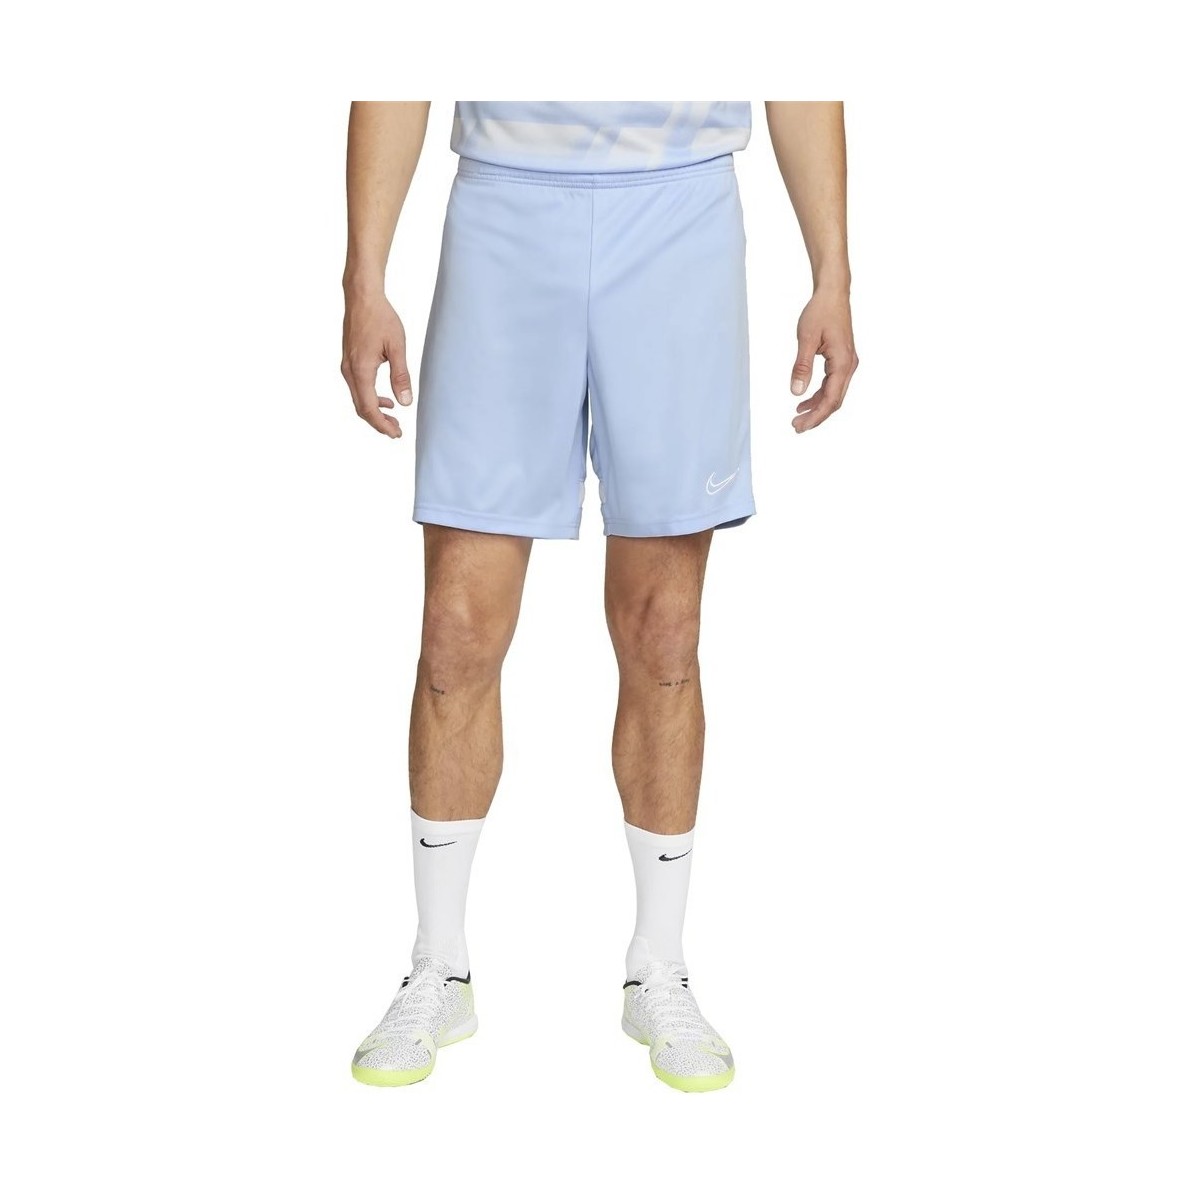 Îmbracaminte Bărbați Pantaloni trei sferturi Nike Drifit Academy Shorts albastru